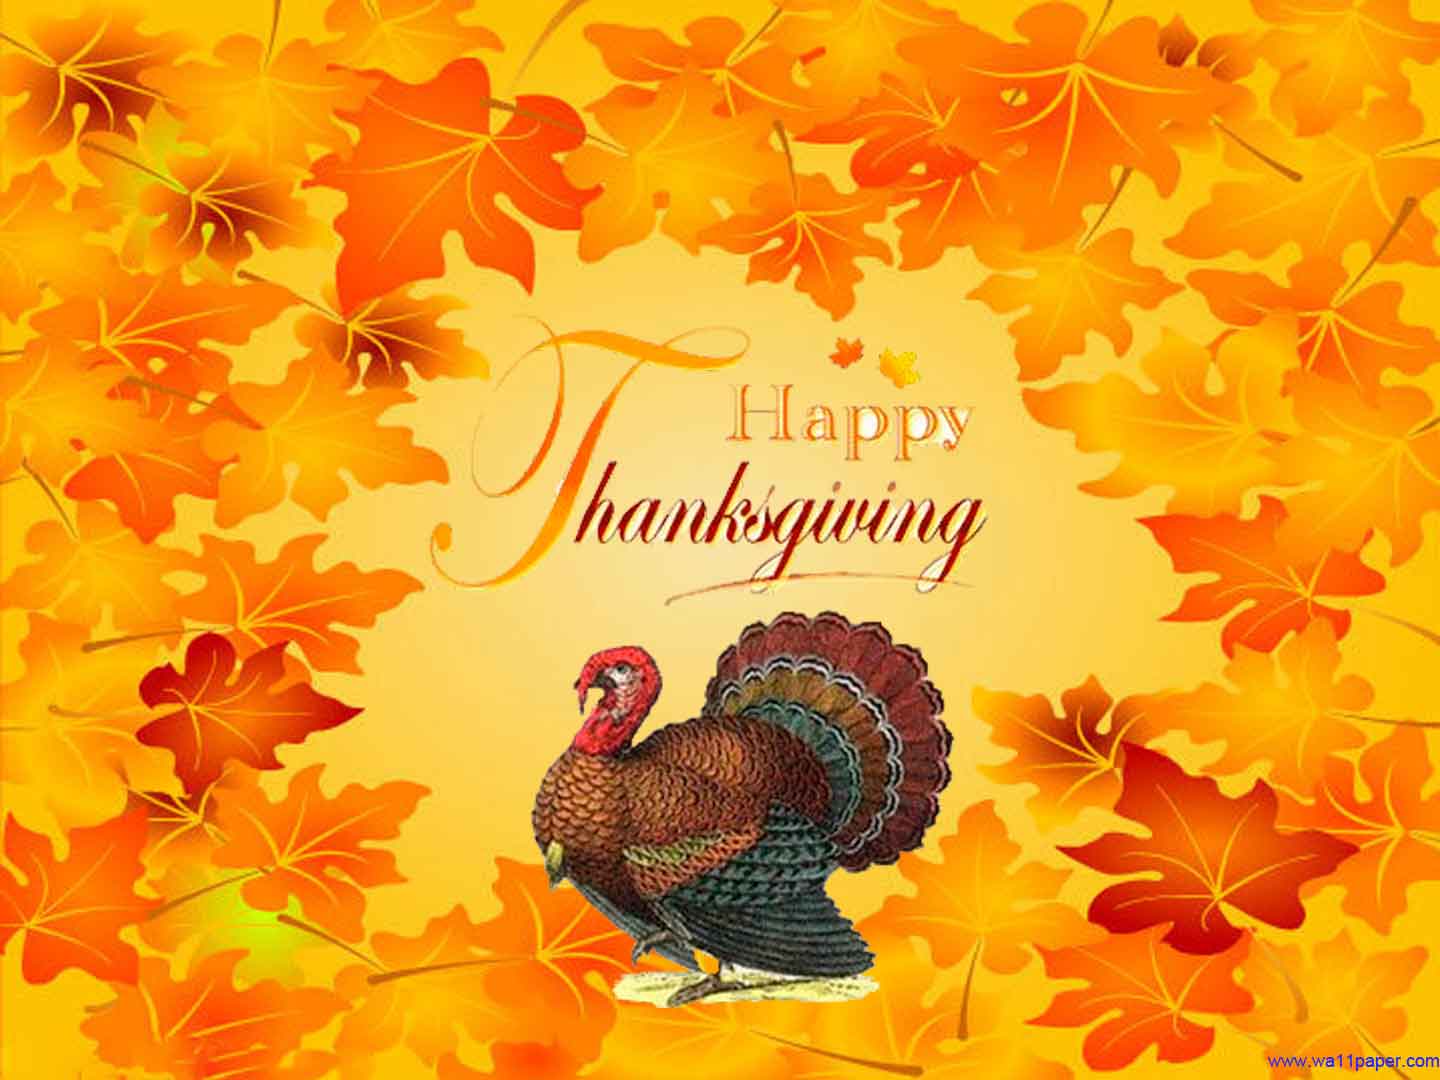 Happy Thanksgiving Turkeyseamless Patternbackgroundwallpaper Stock Vector  Royalty Free 1182154108  Shutterstock